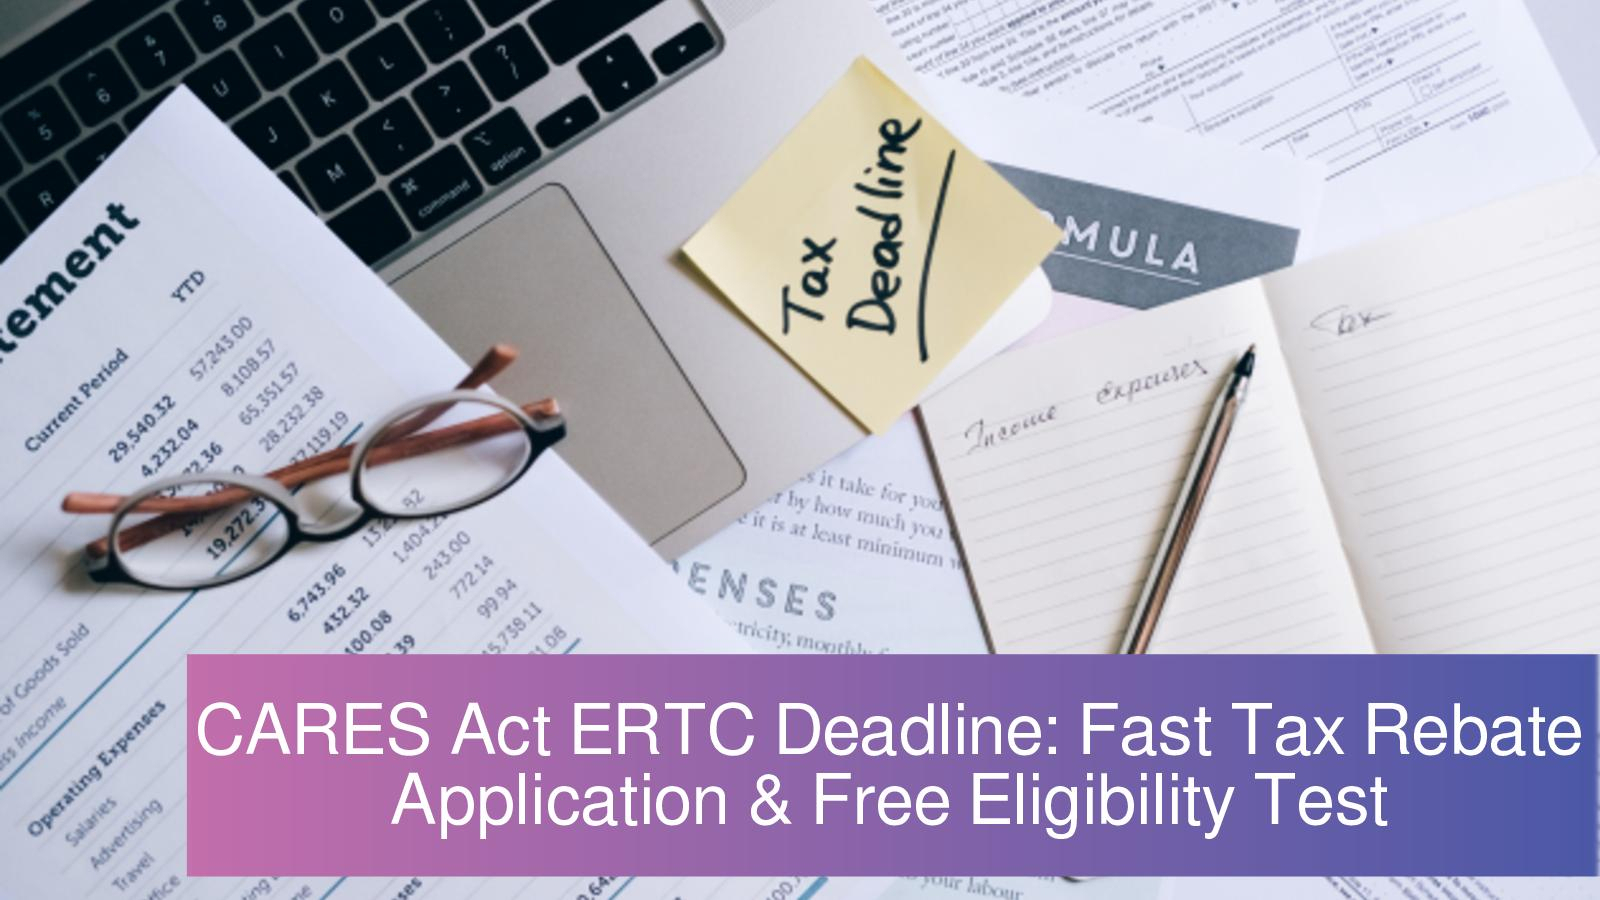 calam-o-cares-act-ertc-deadline-fast-tax-rebate-application-free